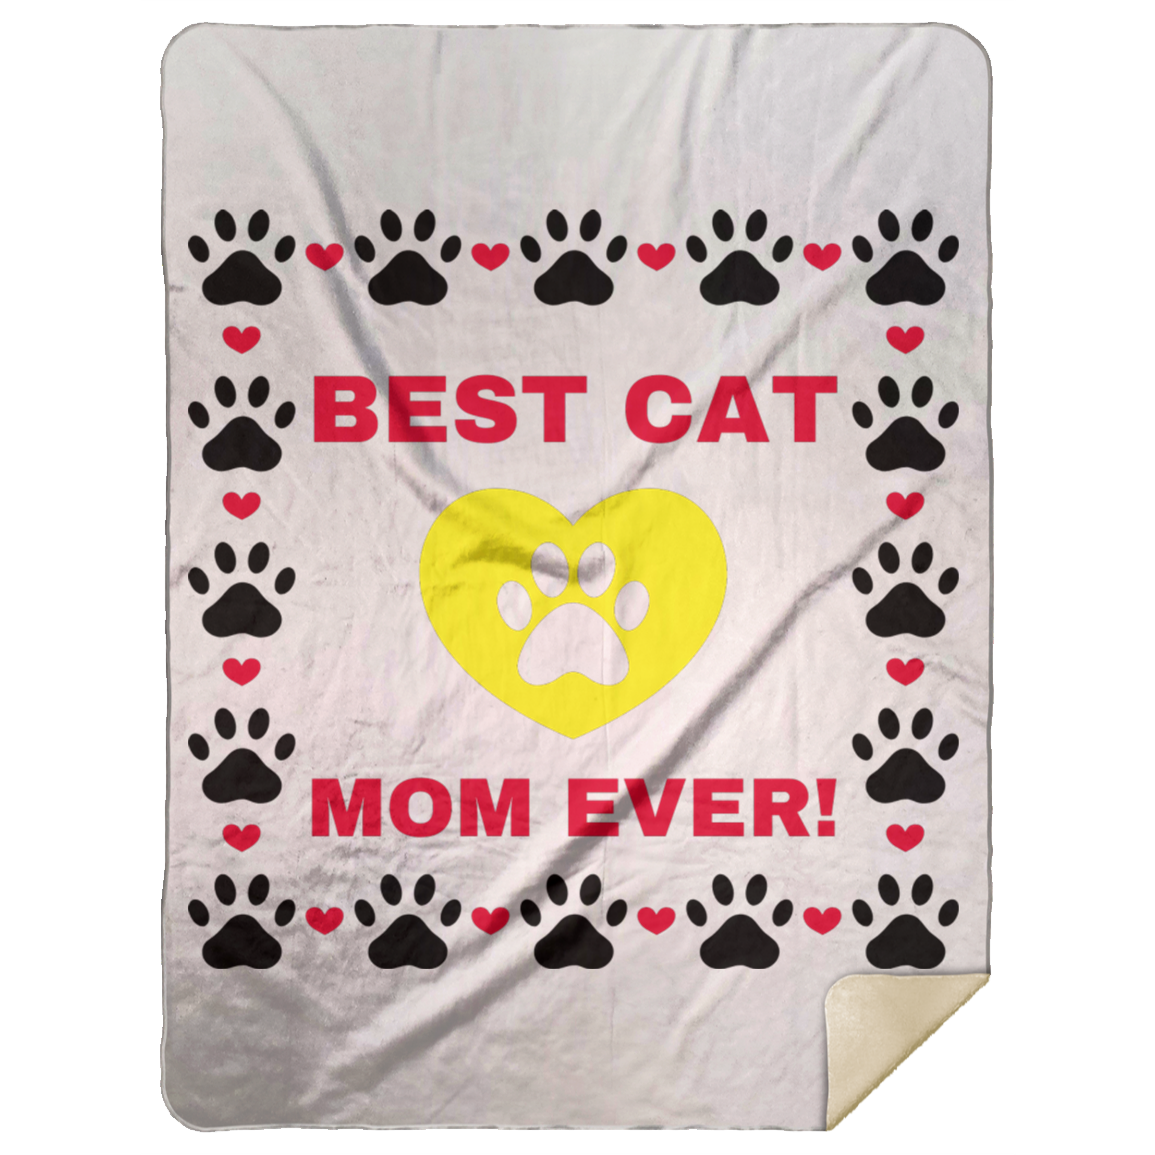 BEST CAT MOM EVER! Premium Mink Sherpa Blanket 60x80